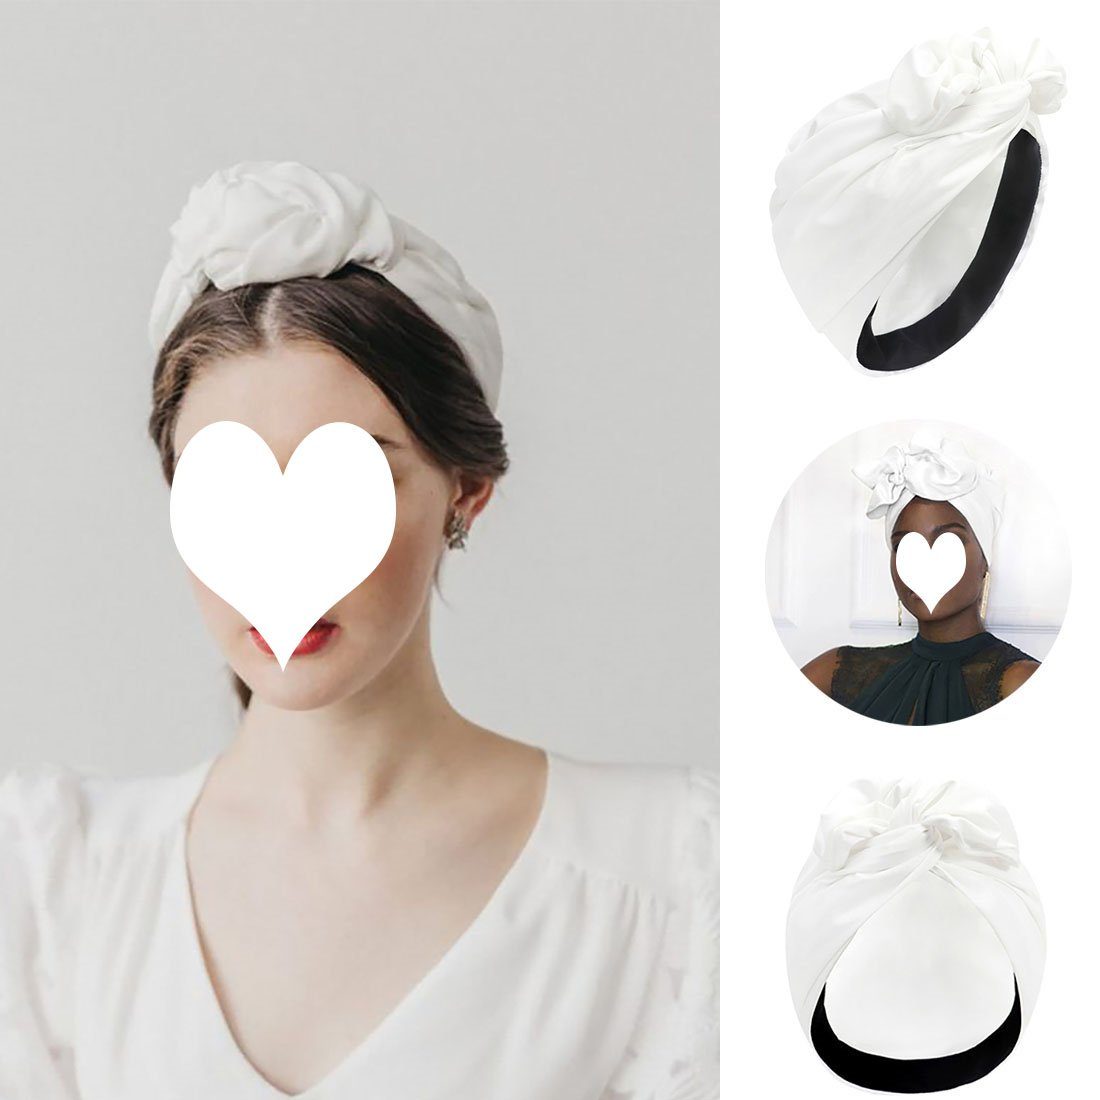 DÖRÖY Schlapphut Frauen Mode Crossover Hut, Vintage Turban Cap Turban, Weiß Overhead